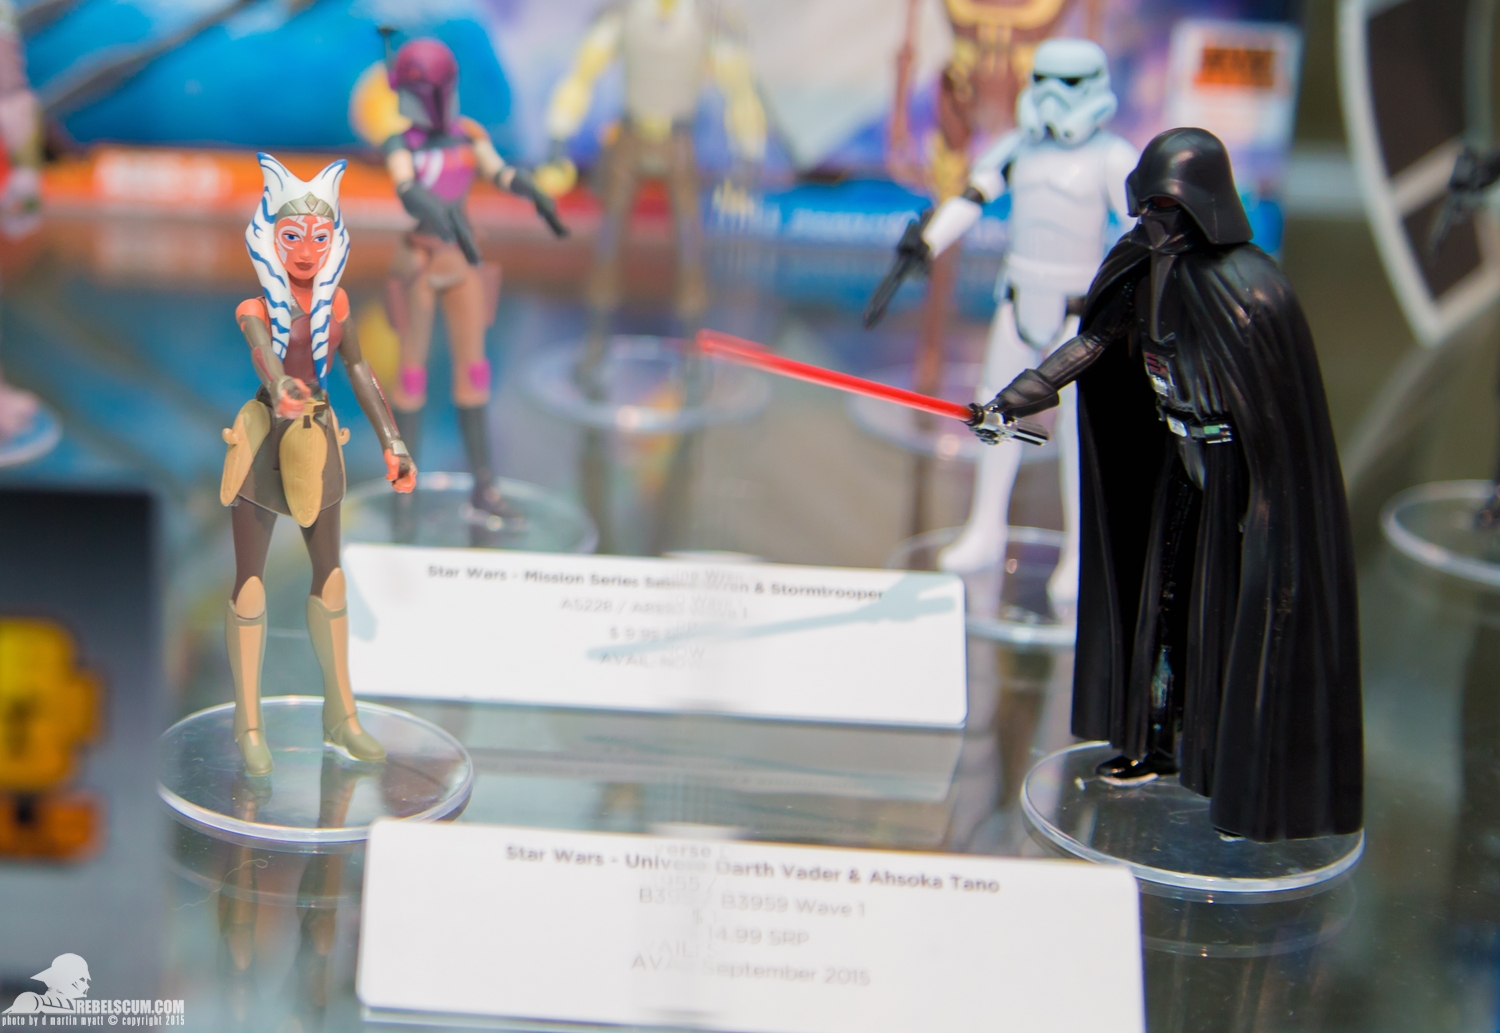 Hasbro-Booth-1-2015-San-Diego-Comic-Con-SDCC-016.jpg